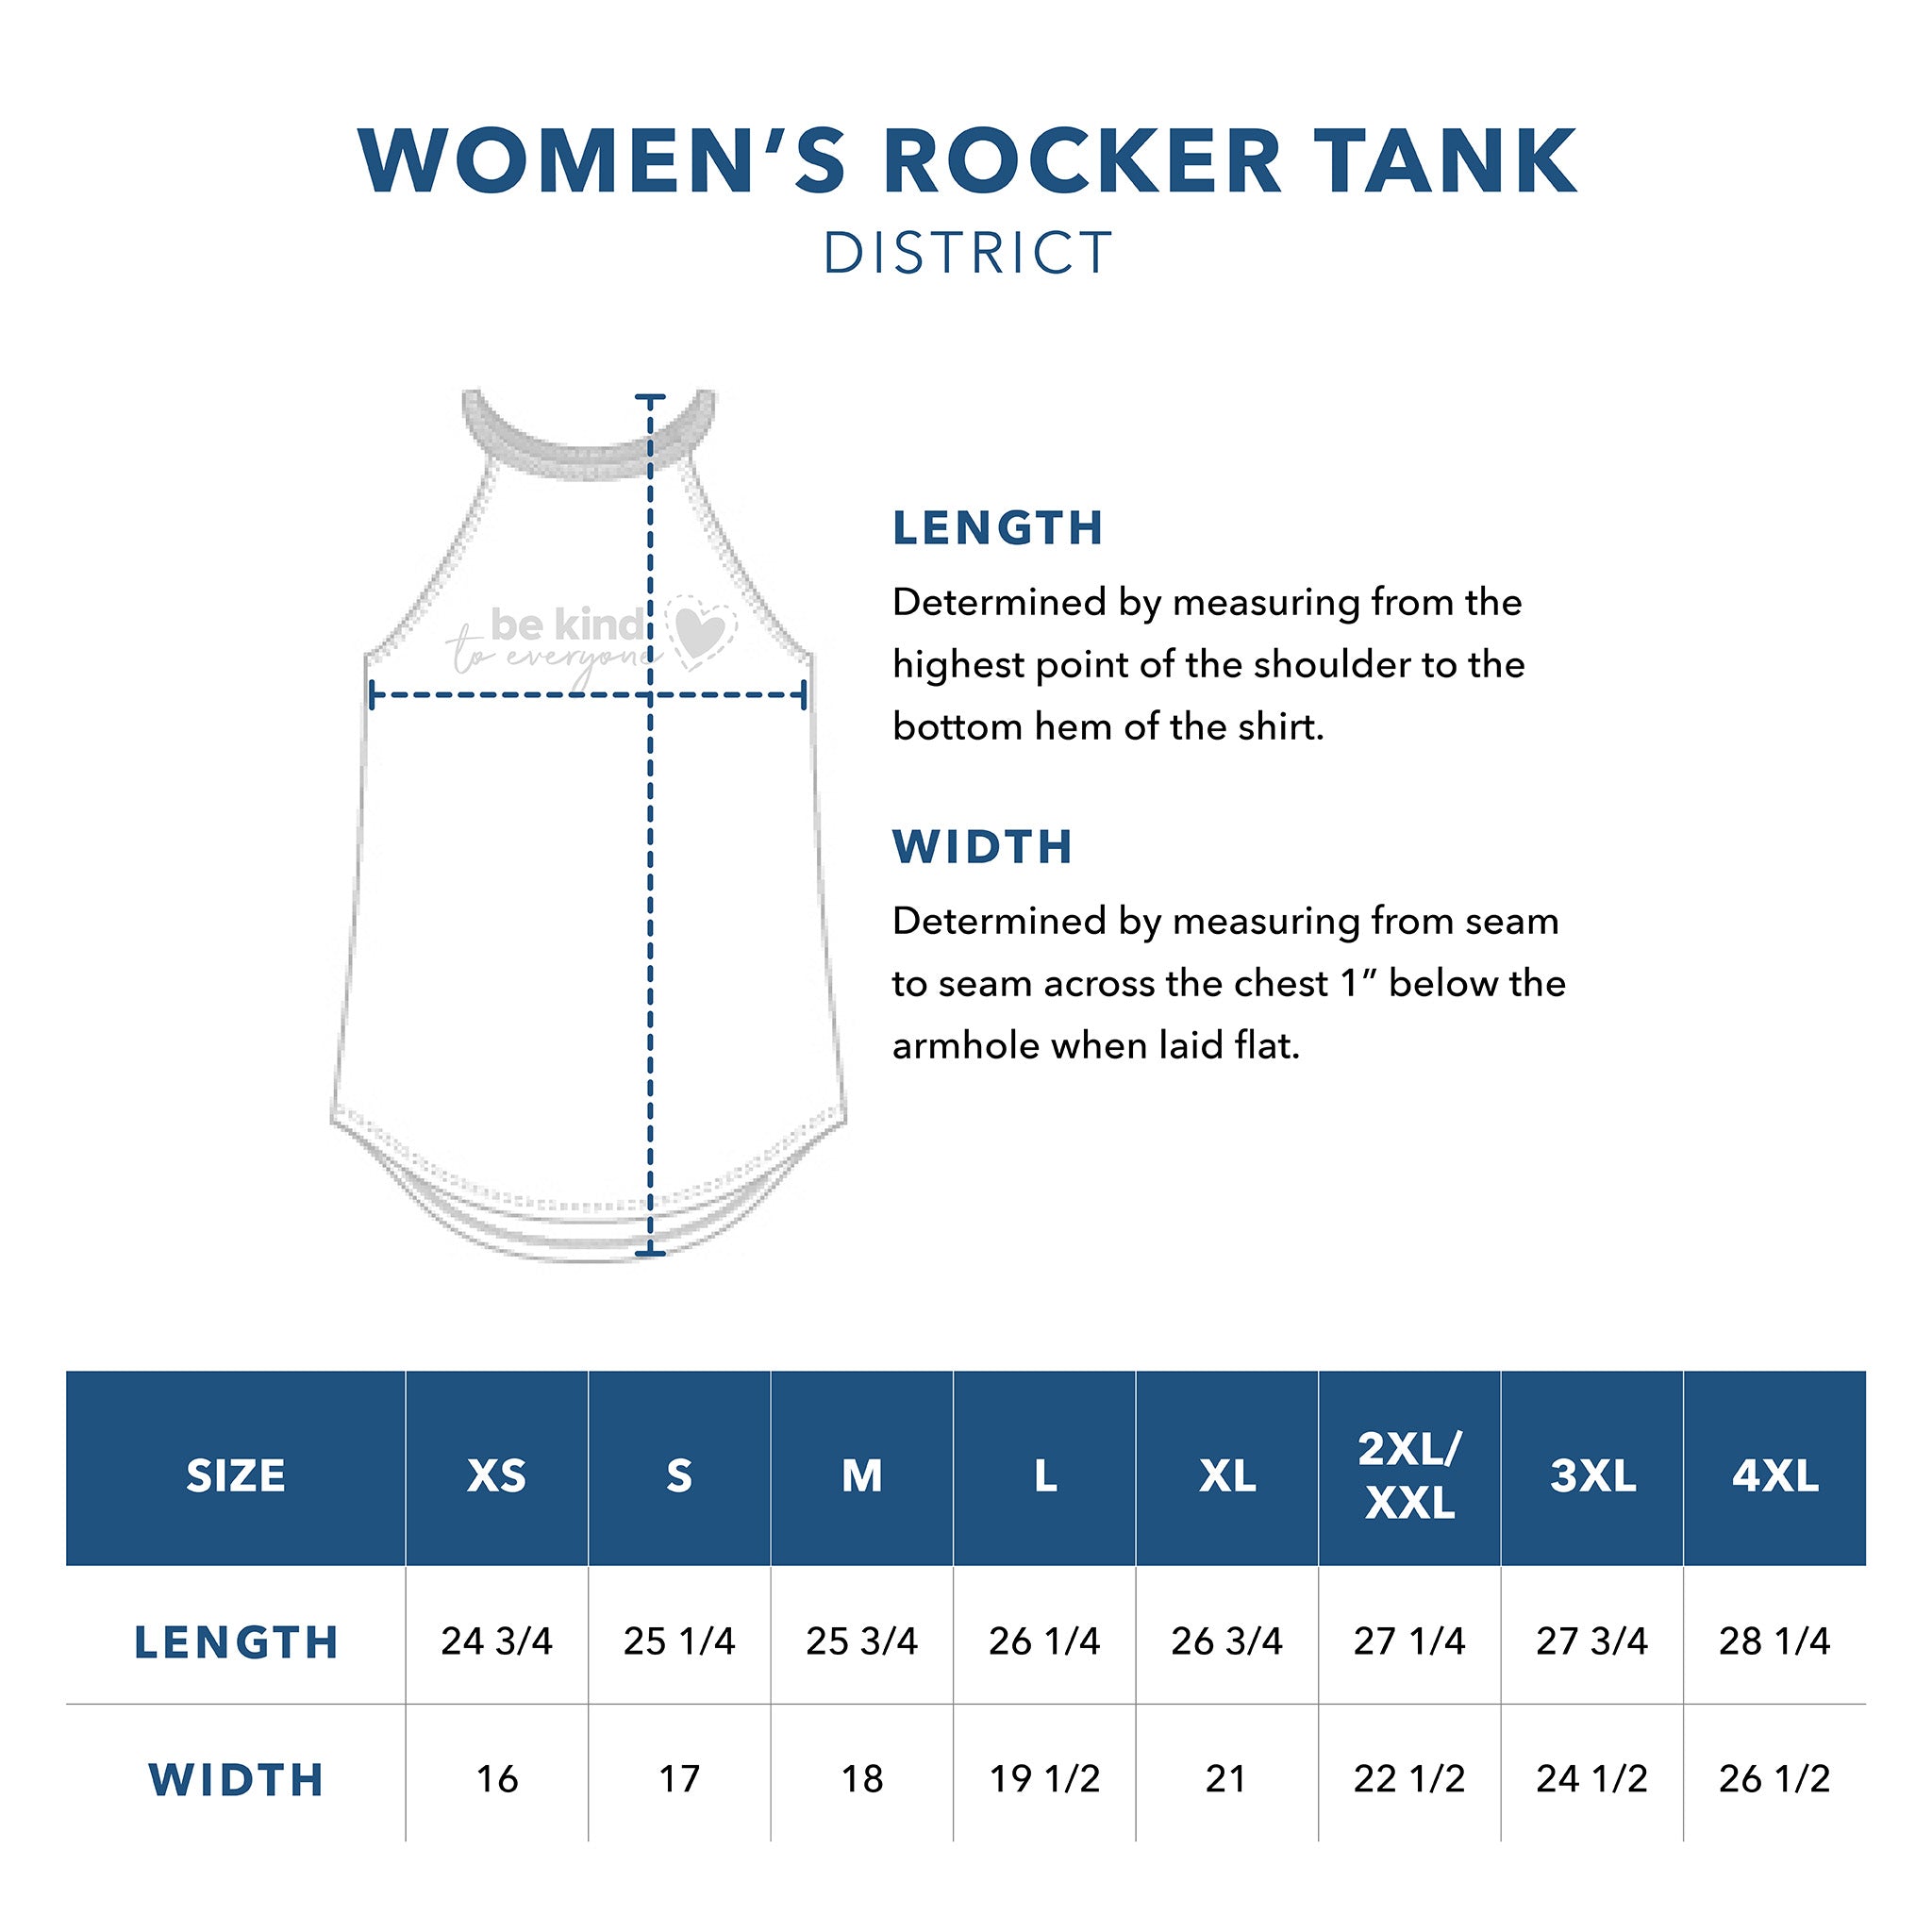 District Women's Rocker Tank Top Sizing Guide